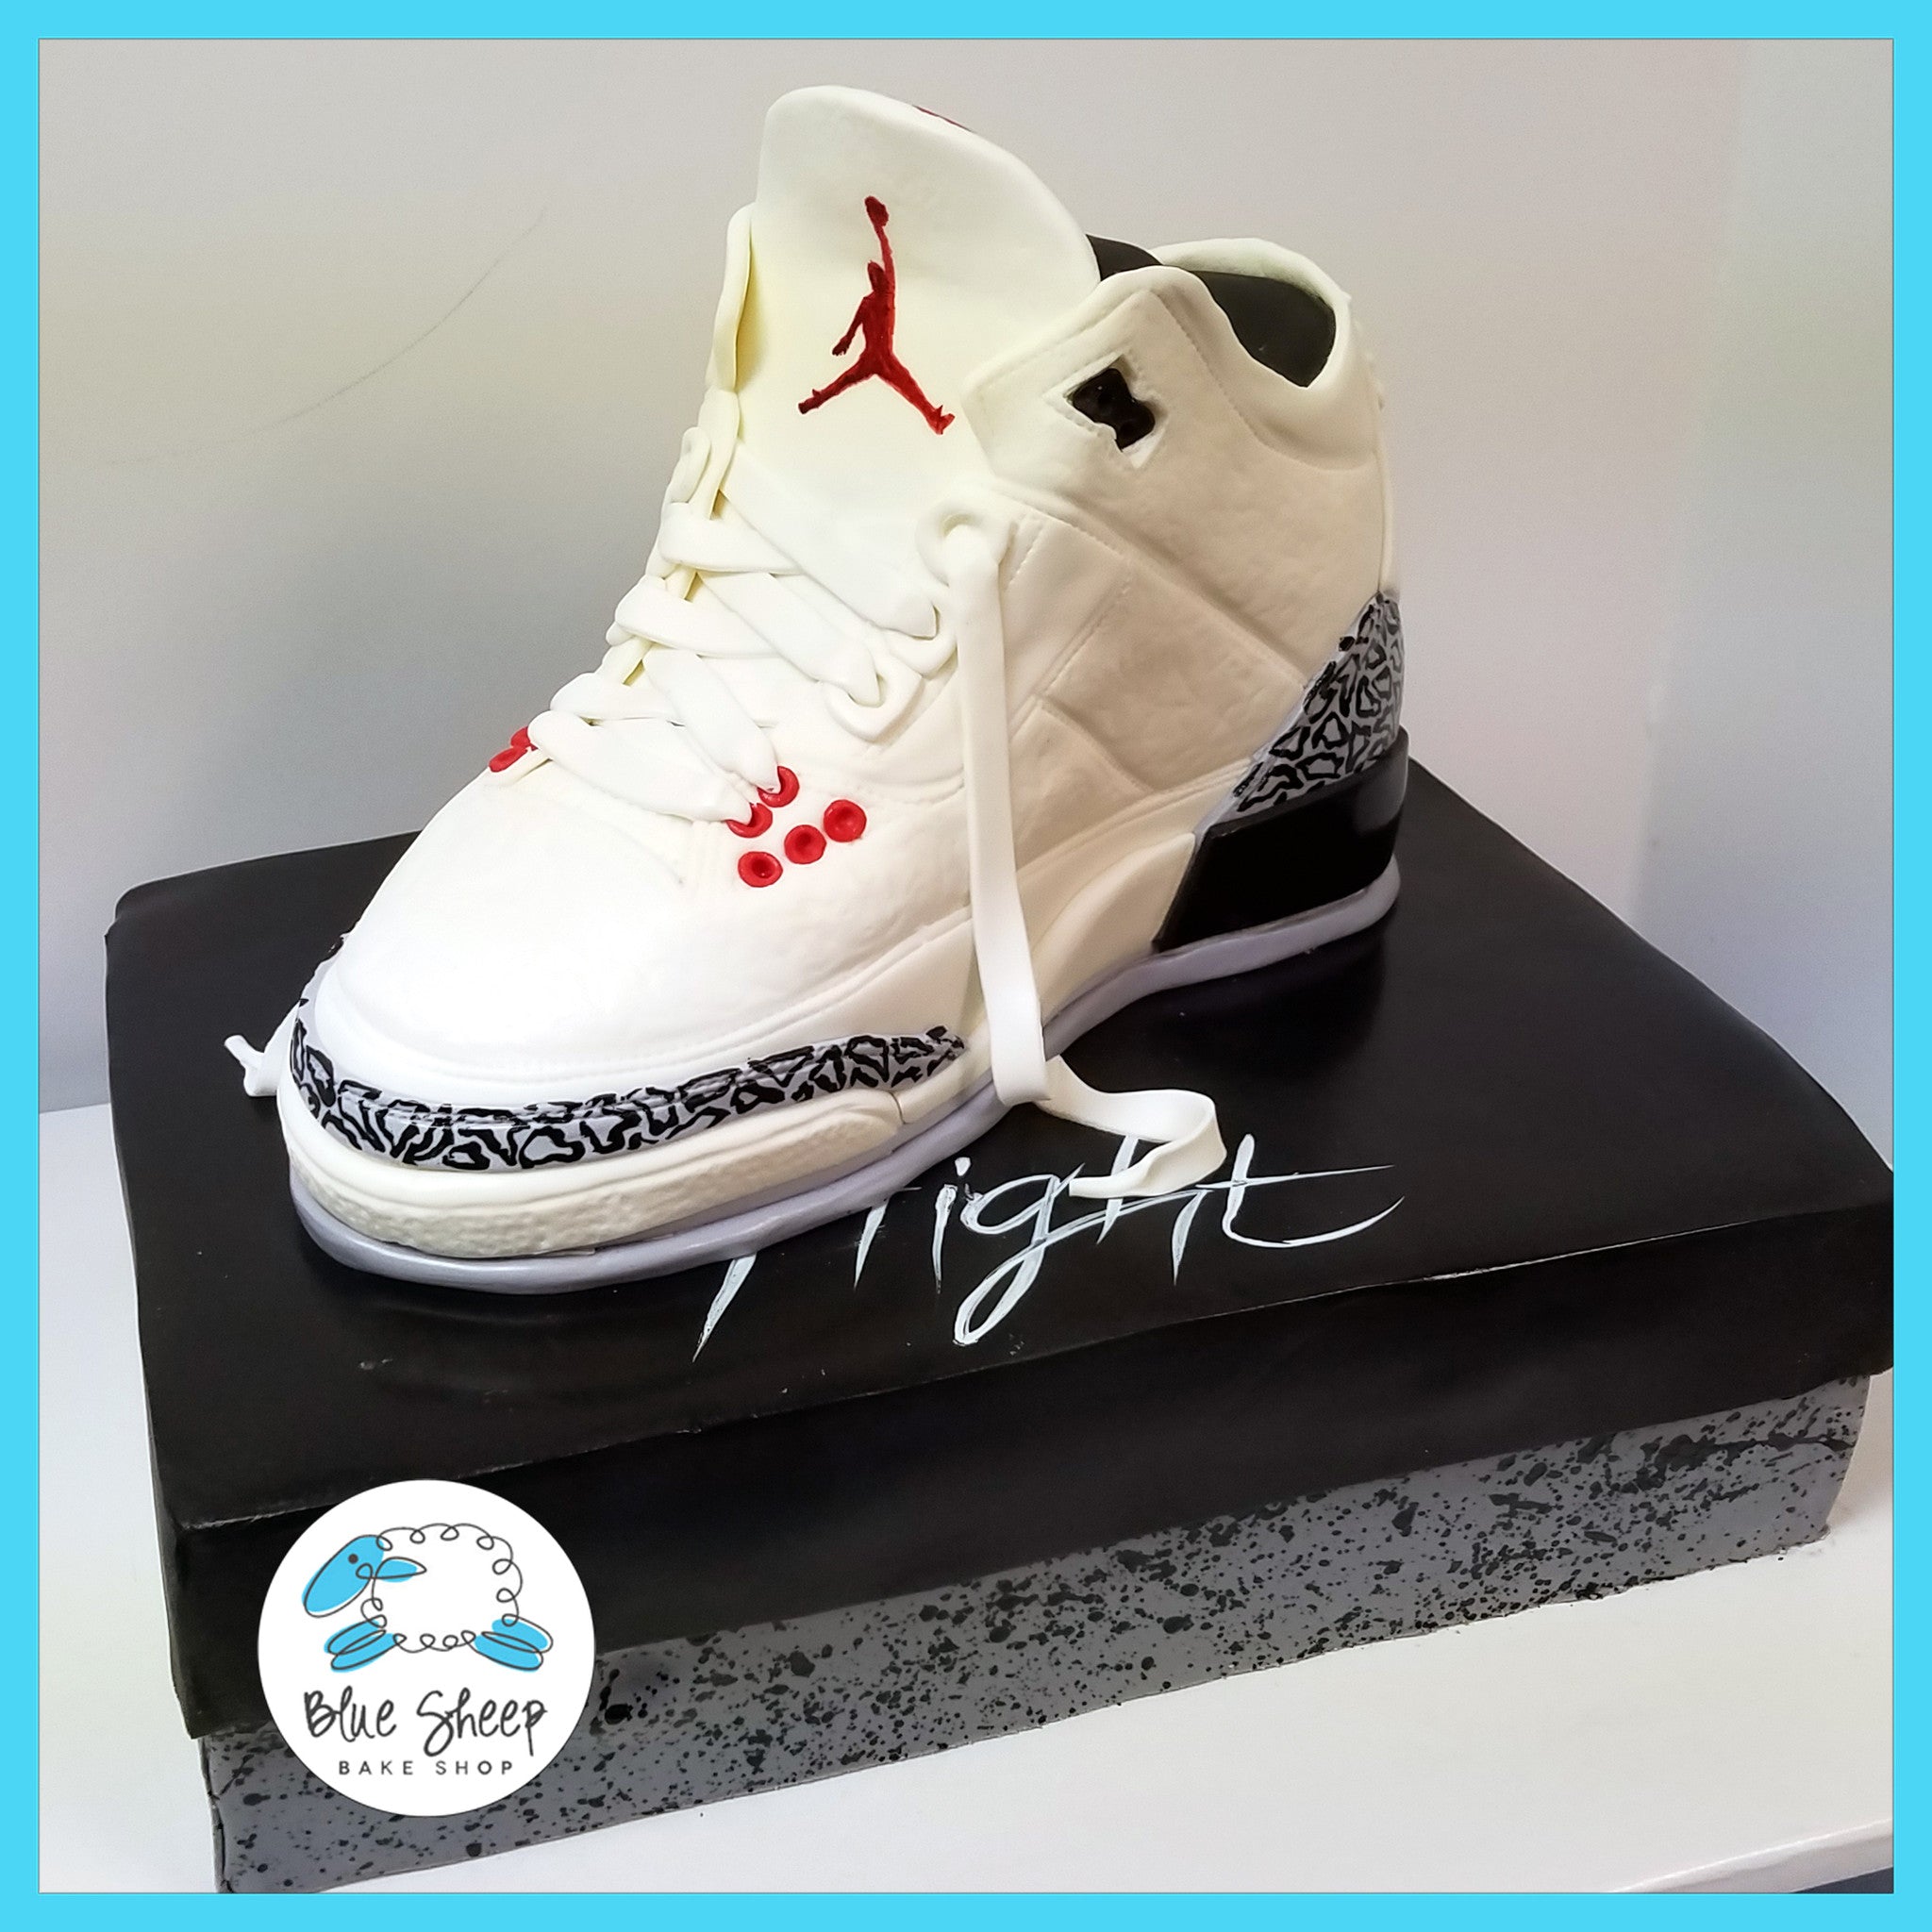 Michael Jordan Cake - $595 20 – Blue Bake